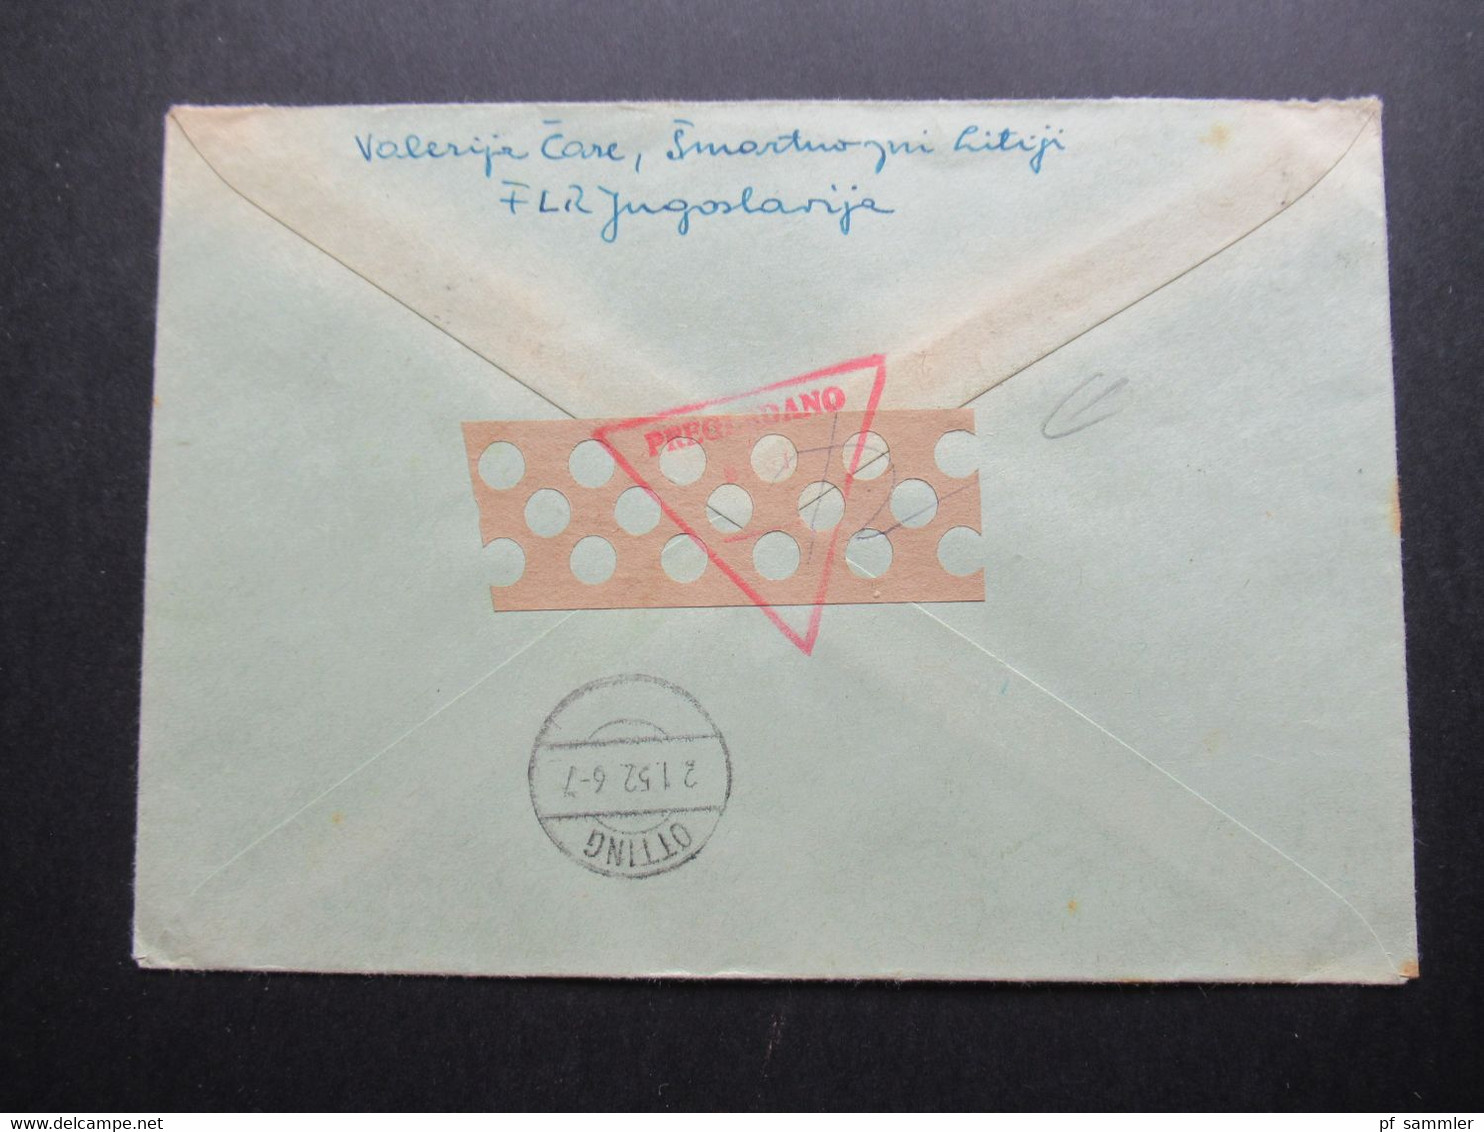 Jugoslawien 1951 Flugzeuge über Landschaften Nr.649/650 Einschreiben Beograd 1 Nach Otting Roter Dreieck Zensurstempel - Brieven En Documenten